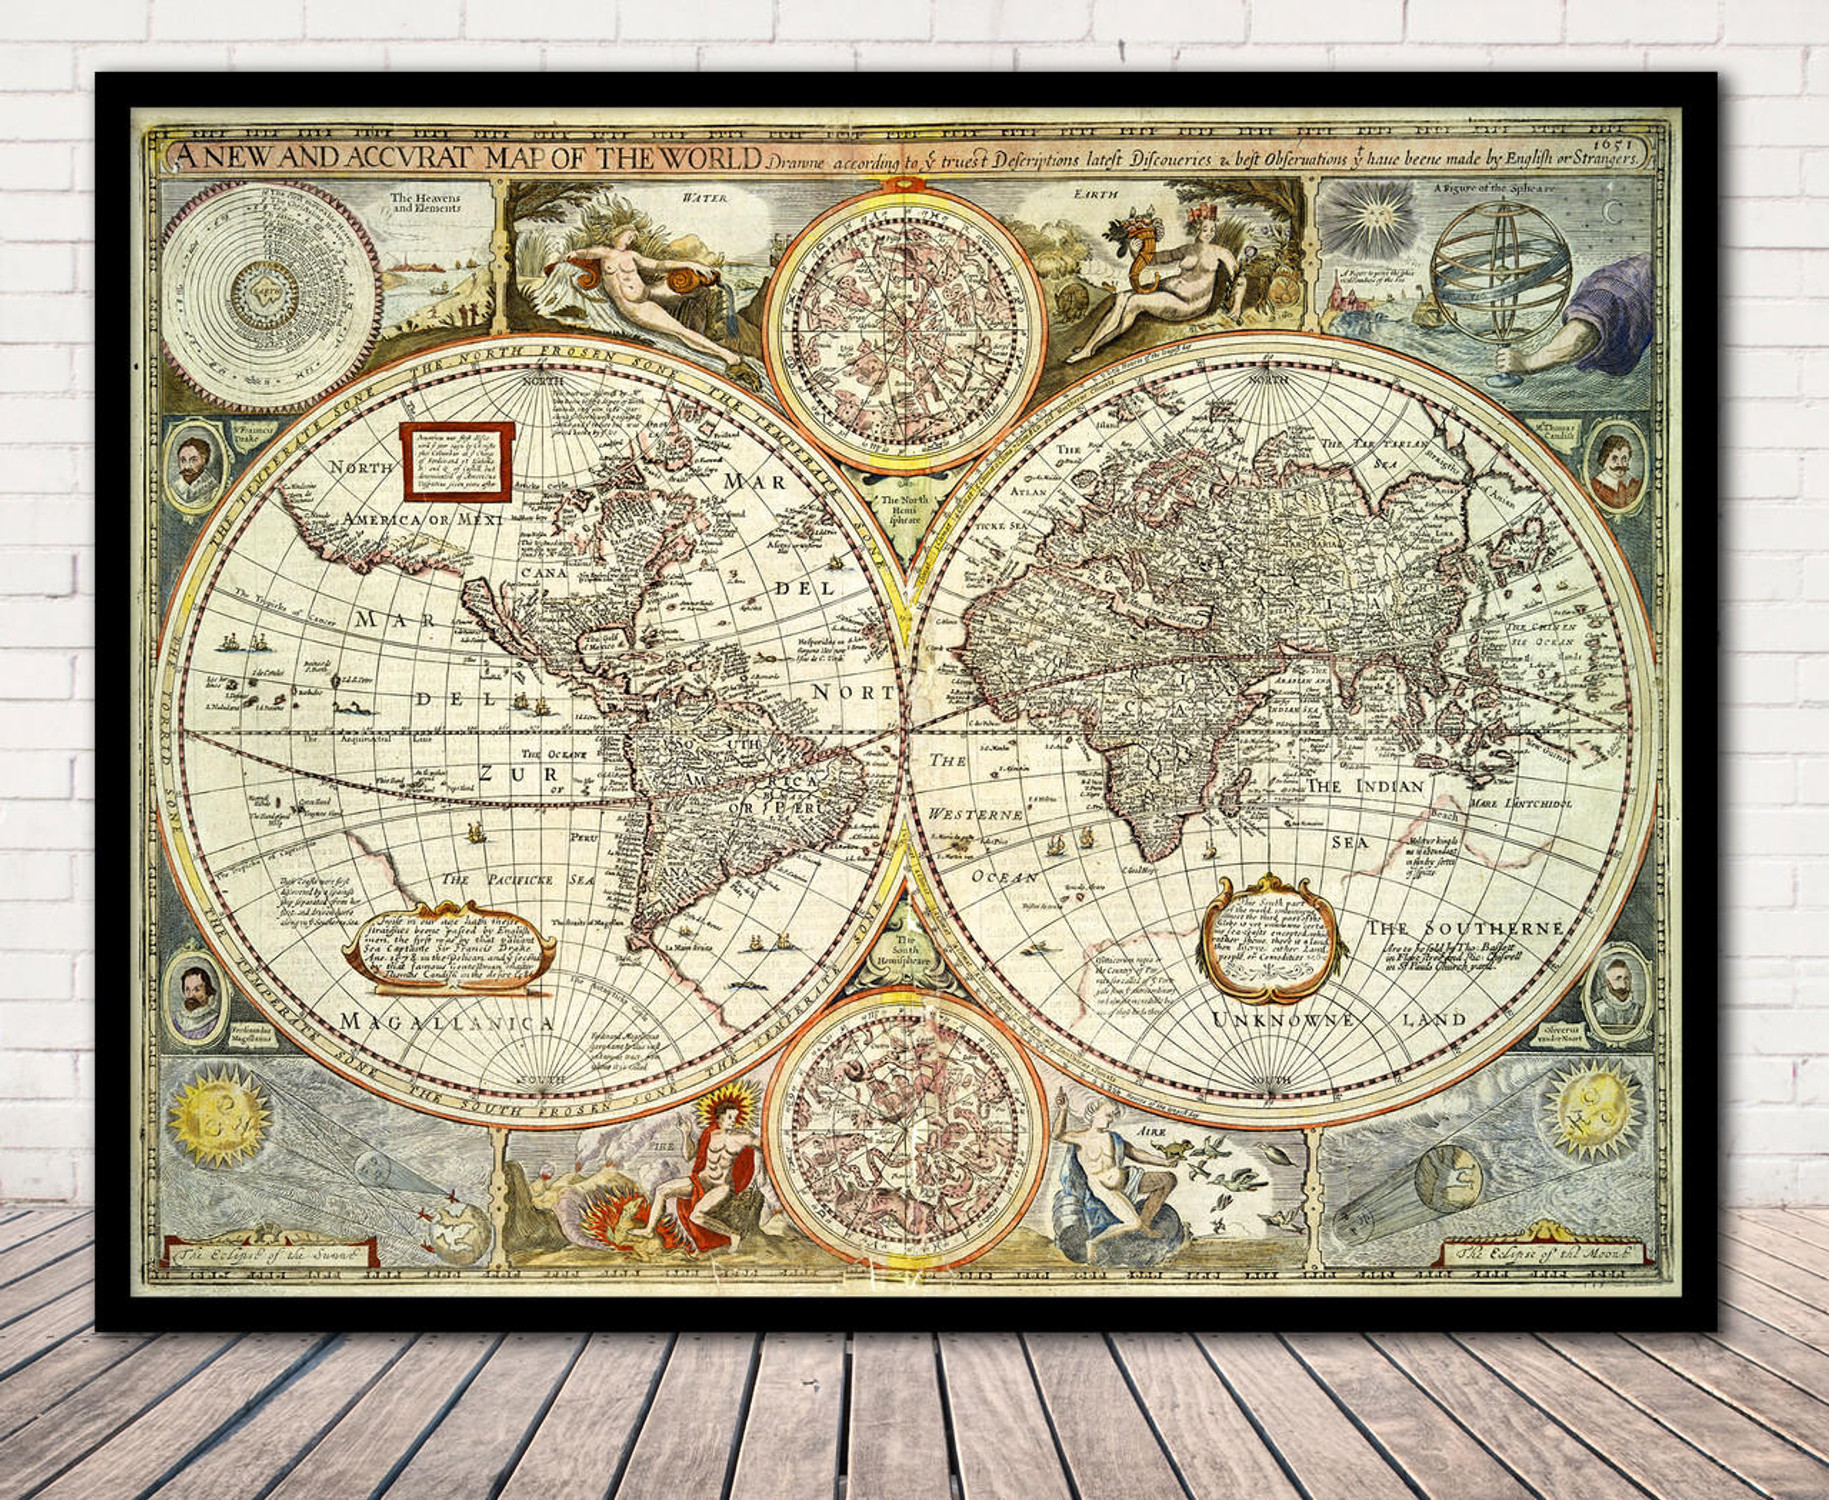 Historic World Map - 1676 - Antique Map Print, image 1, World Maps Online